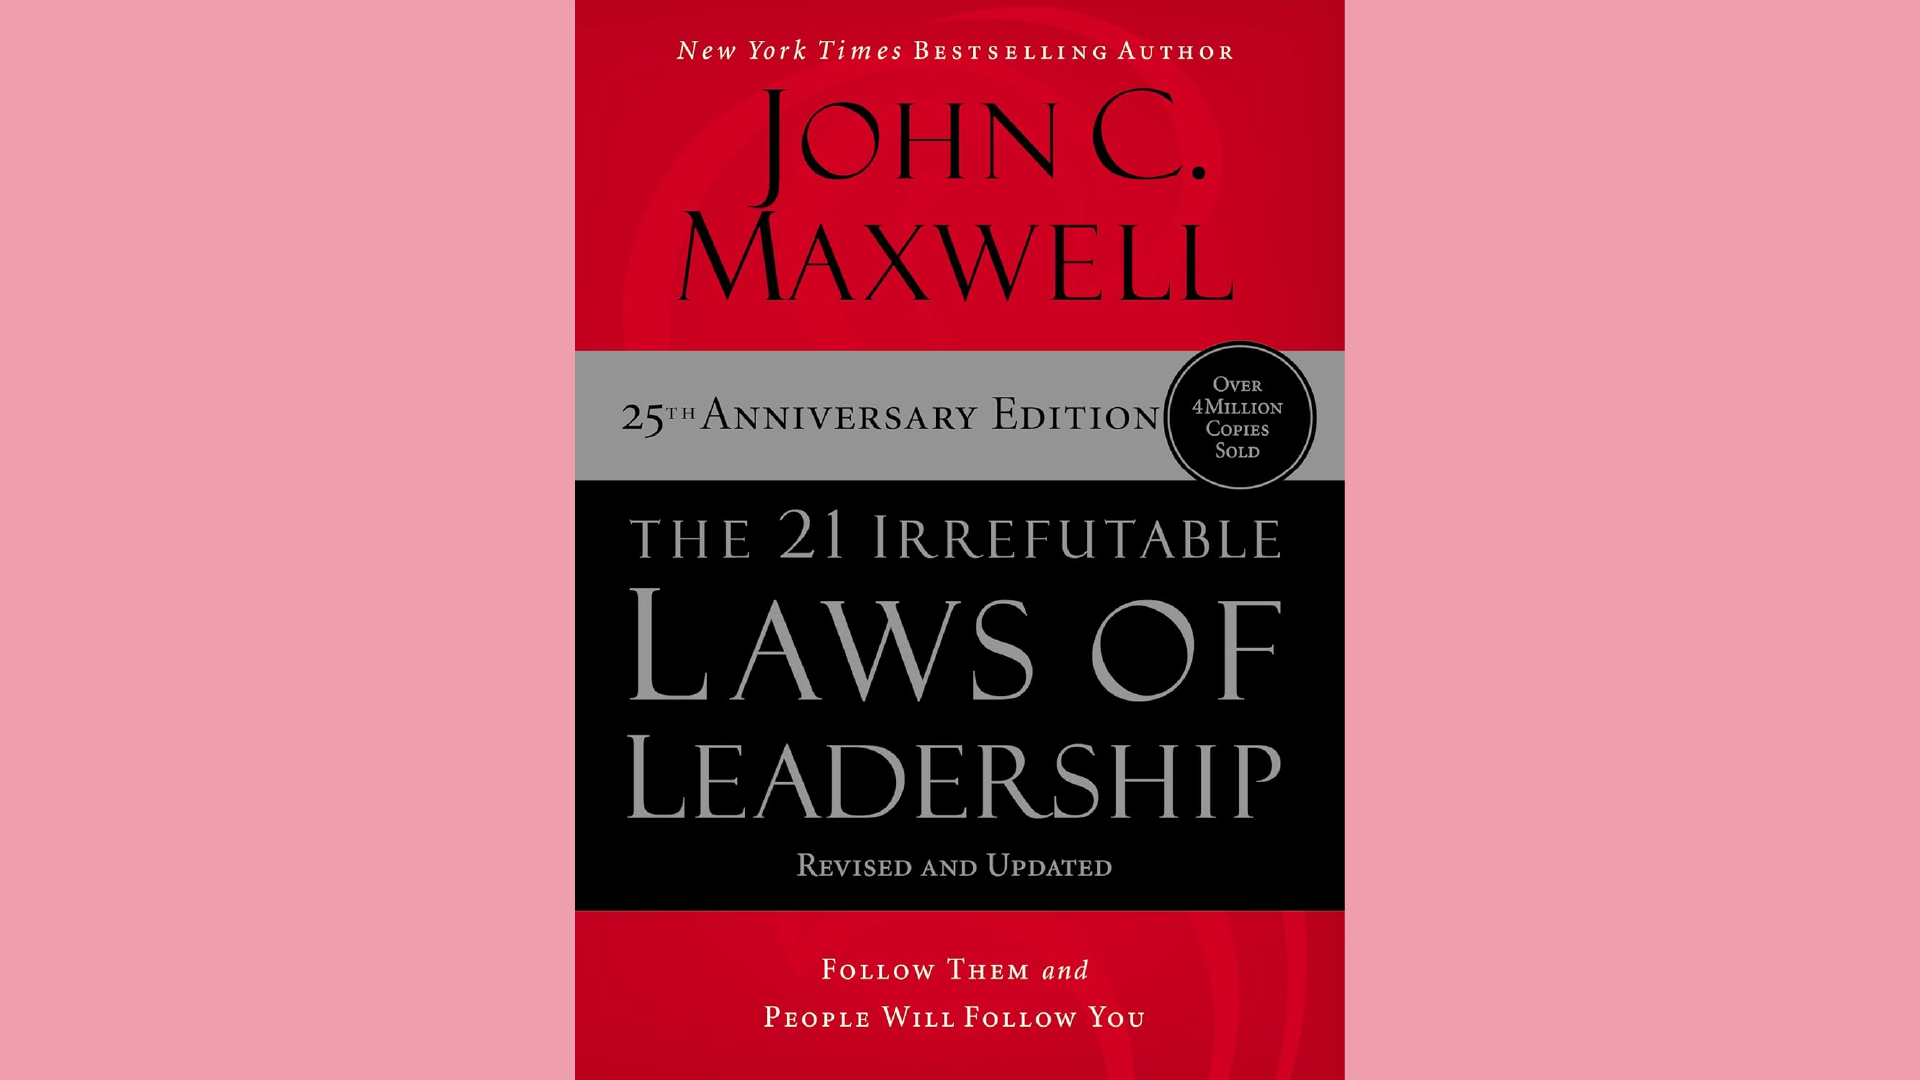 Summary: The 21 Irrefutable Laws of Leadership by John C. Maxwell